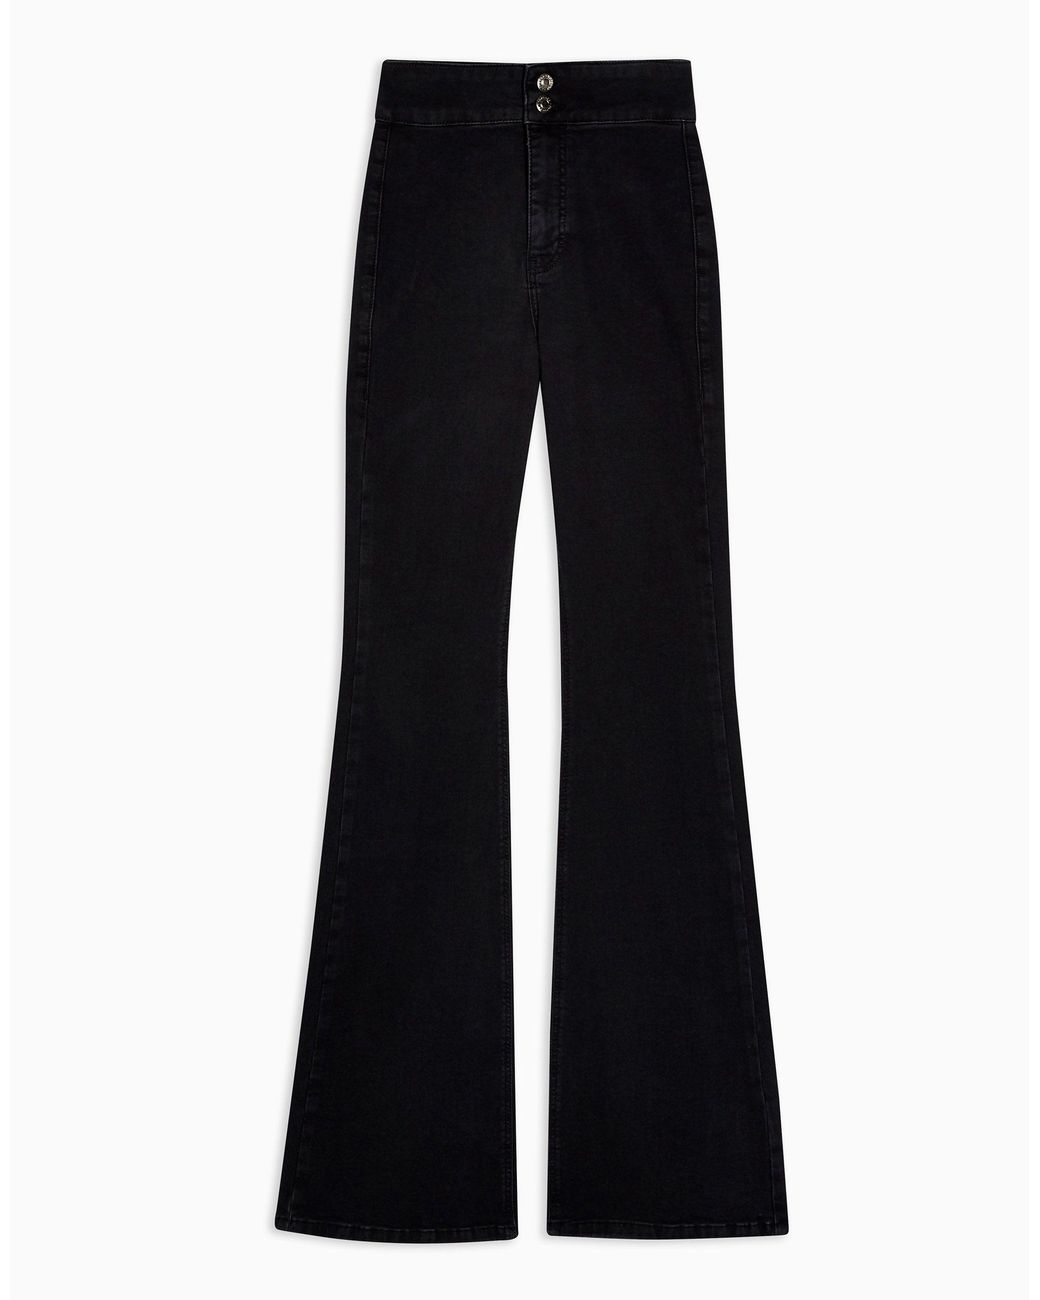 TOPSHOP Denim Skinny Stretch Flare Jeans in Black | Lyst